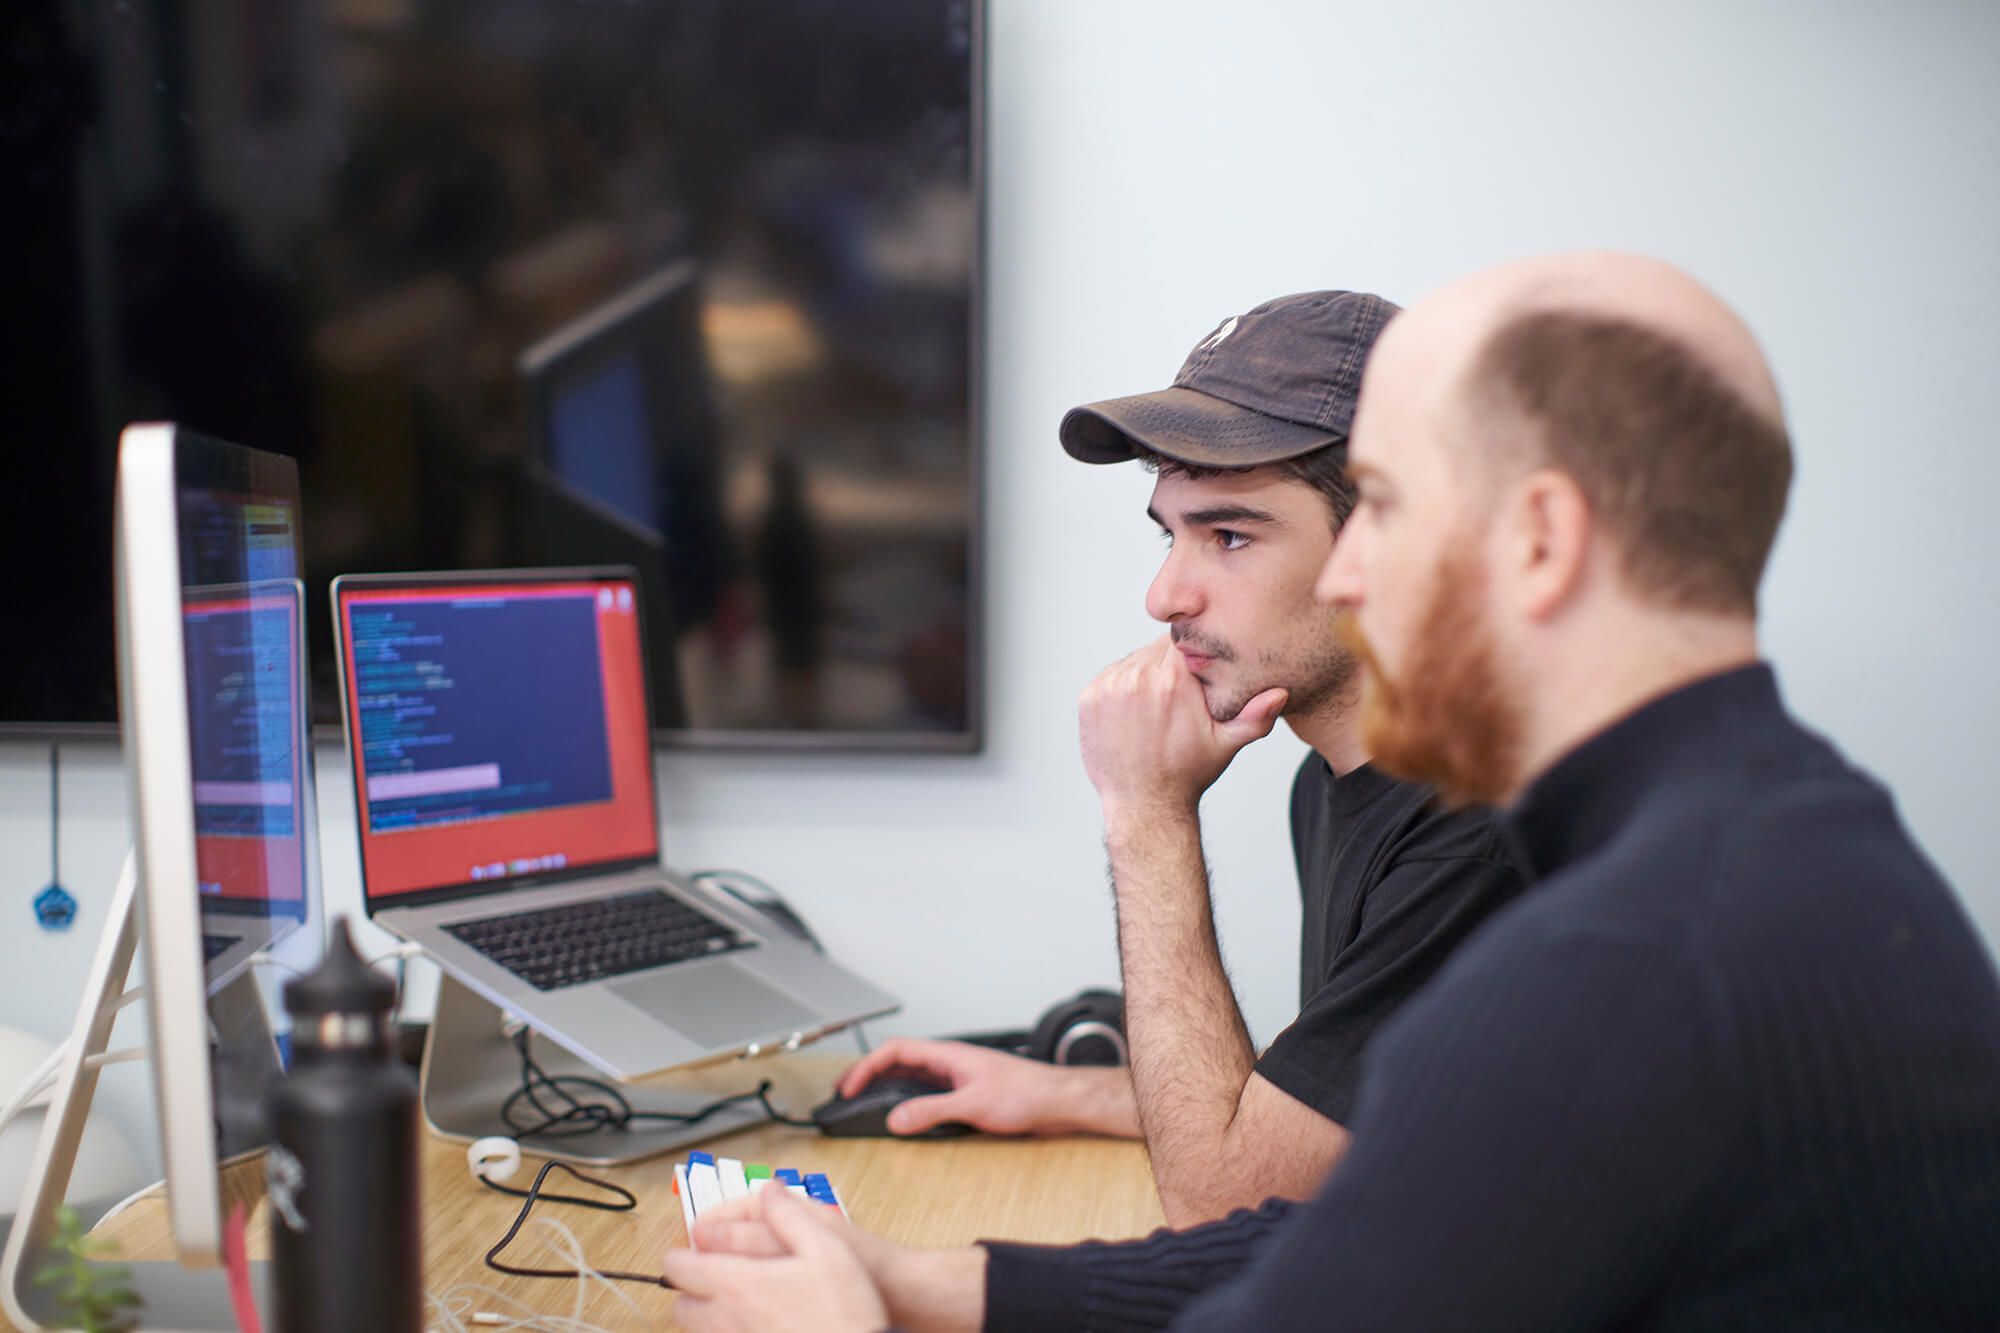 Two members of the Hologram engineering team pair programming in the Hologram office